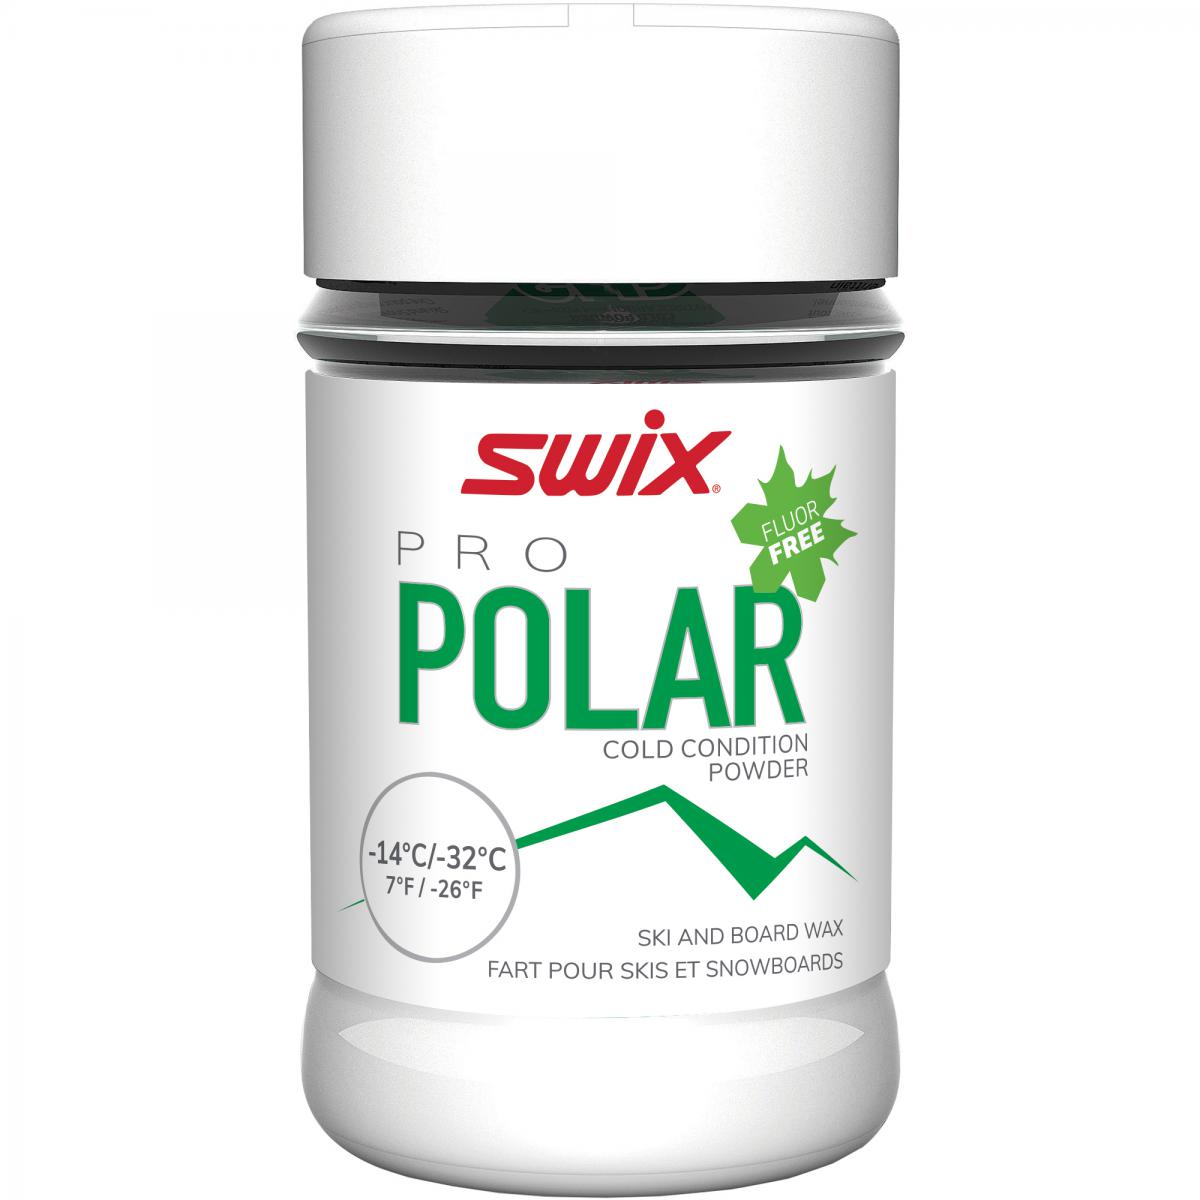 Swix  PS Polar Powder, -14°C-32°C, 30g